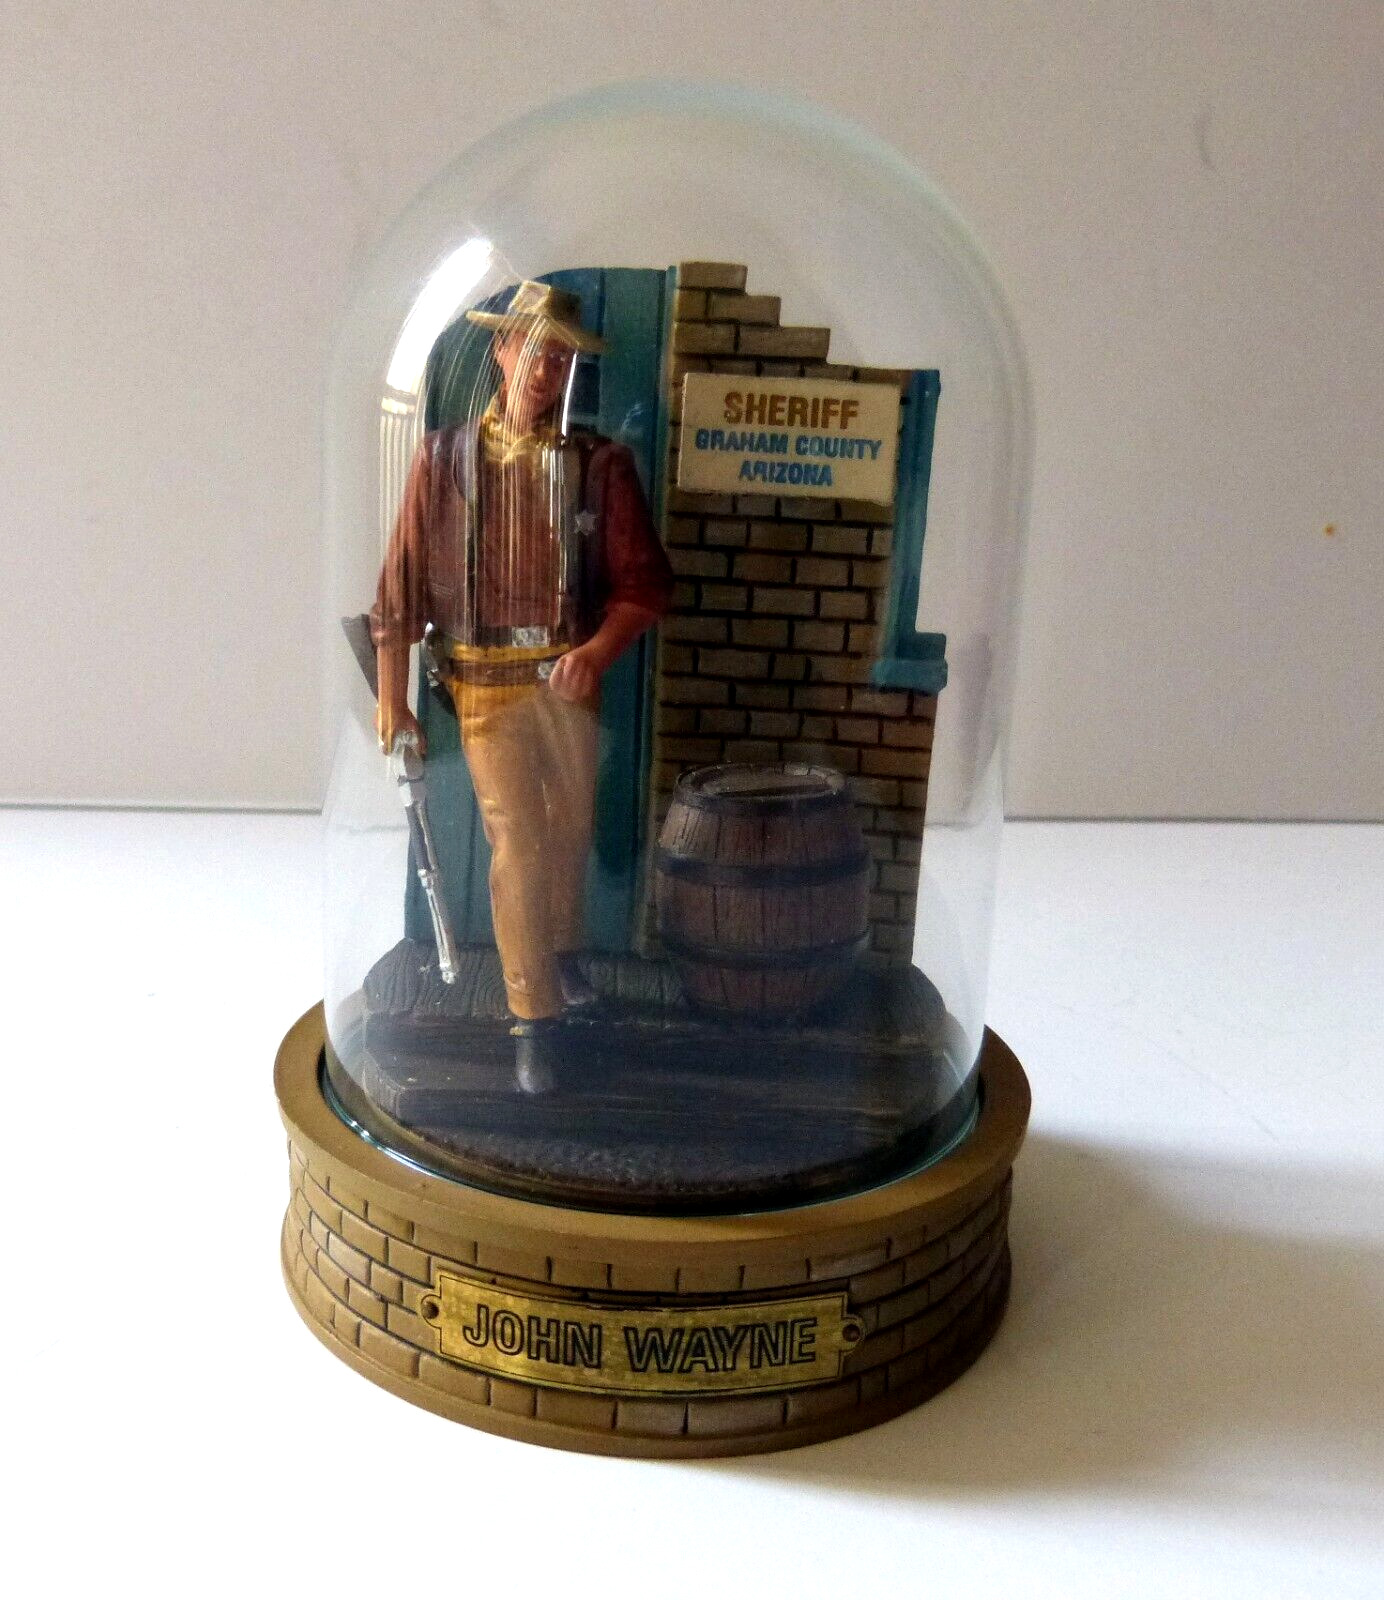 Franklin Mint John Wayne Long Arm of the West Figurine Under Domed Glass